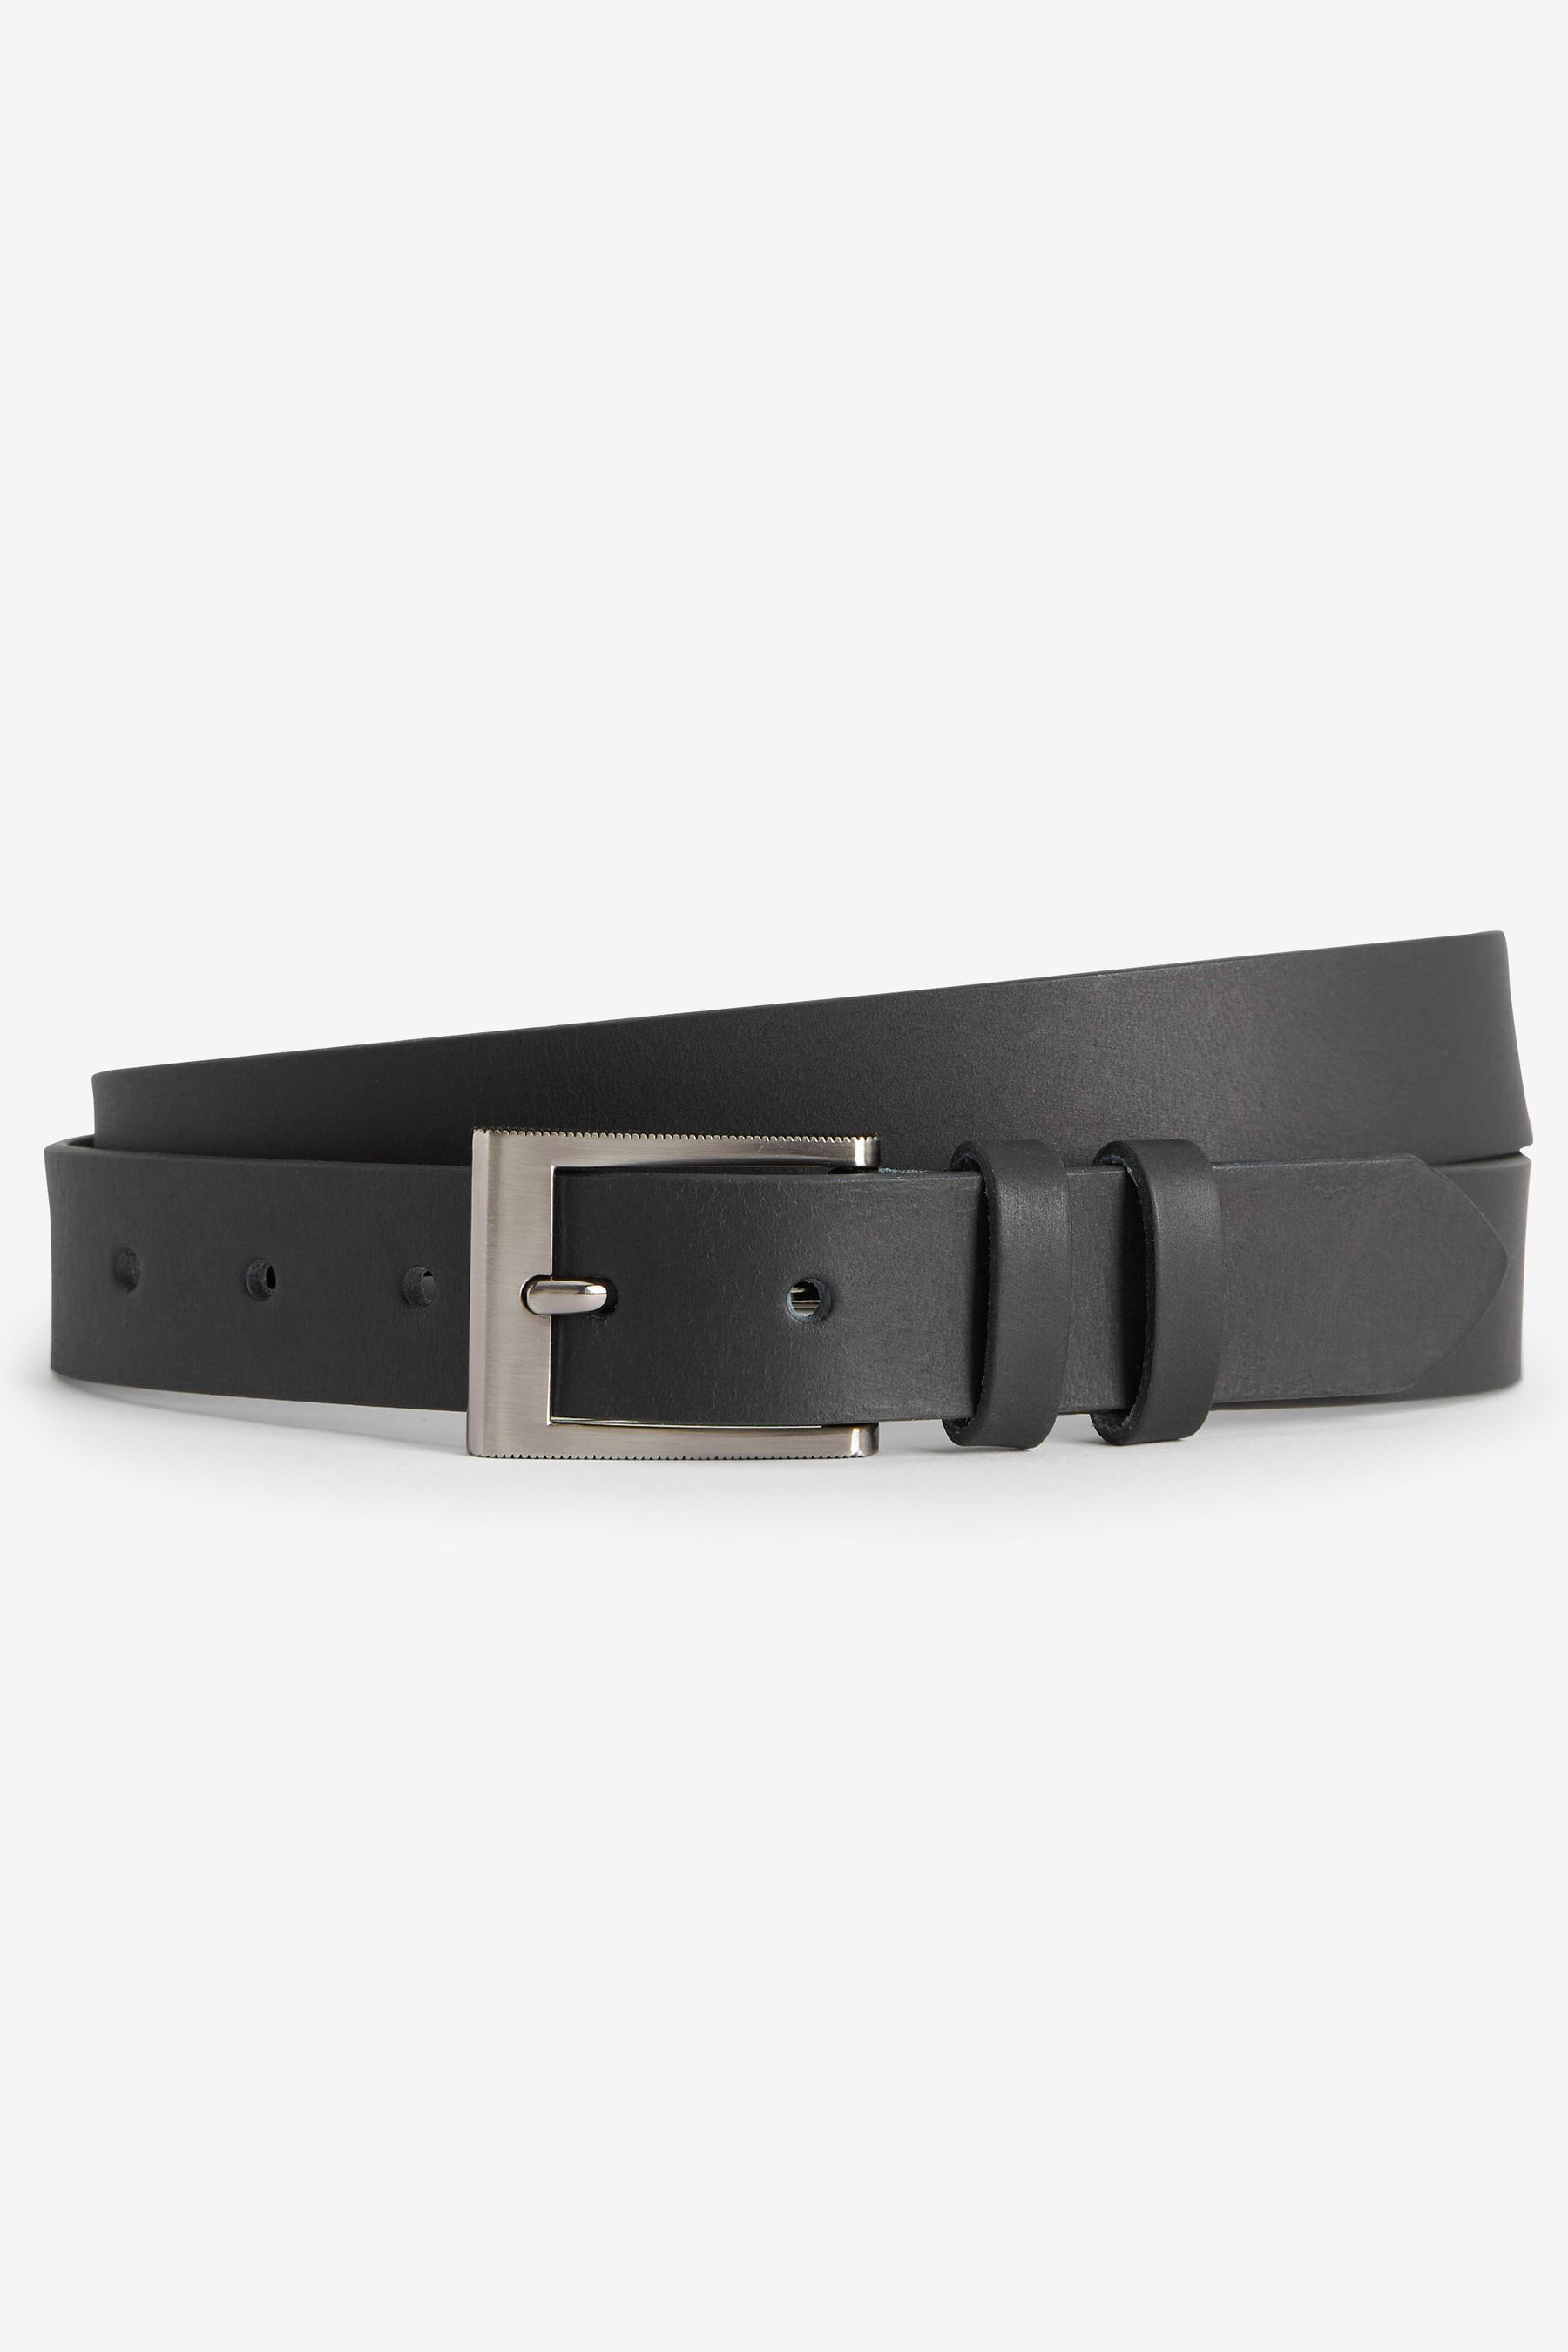 Buy Leather Belt from Next Ireland